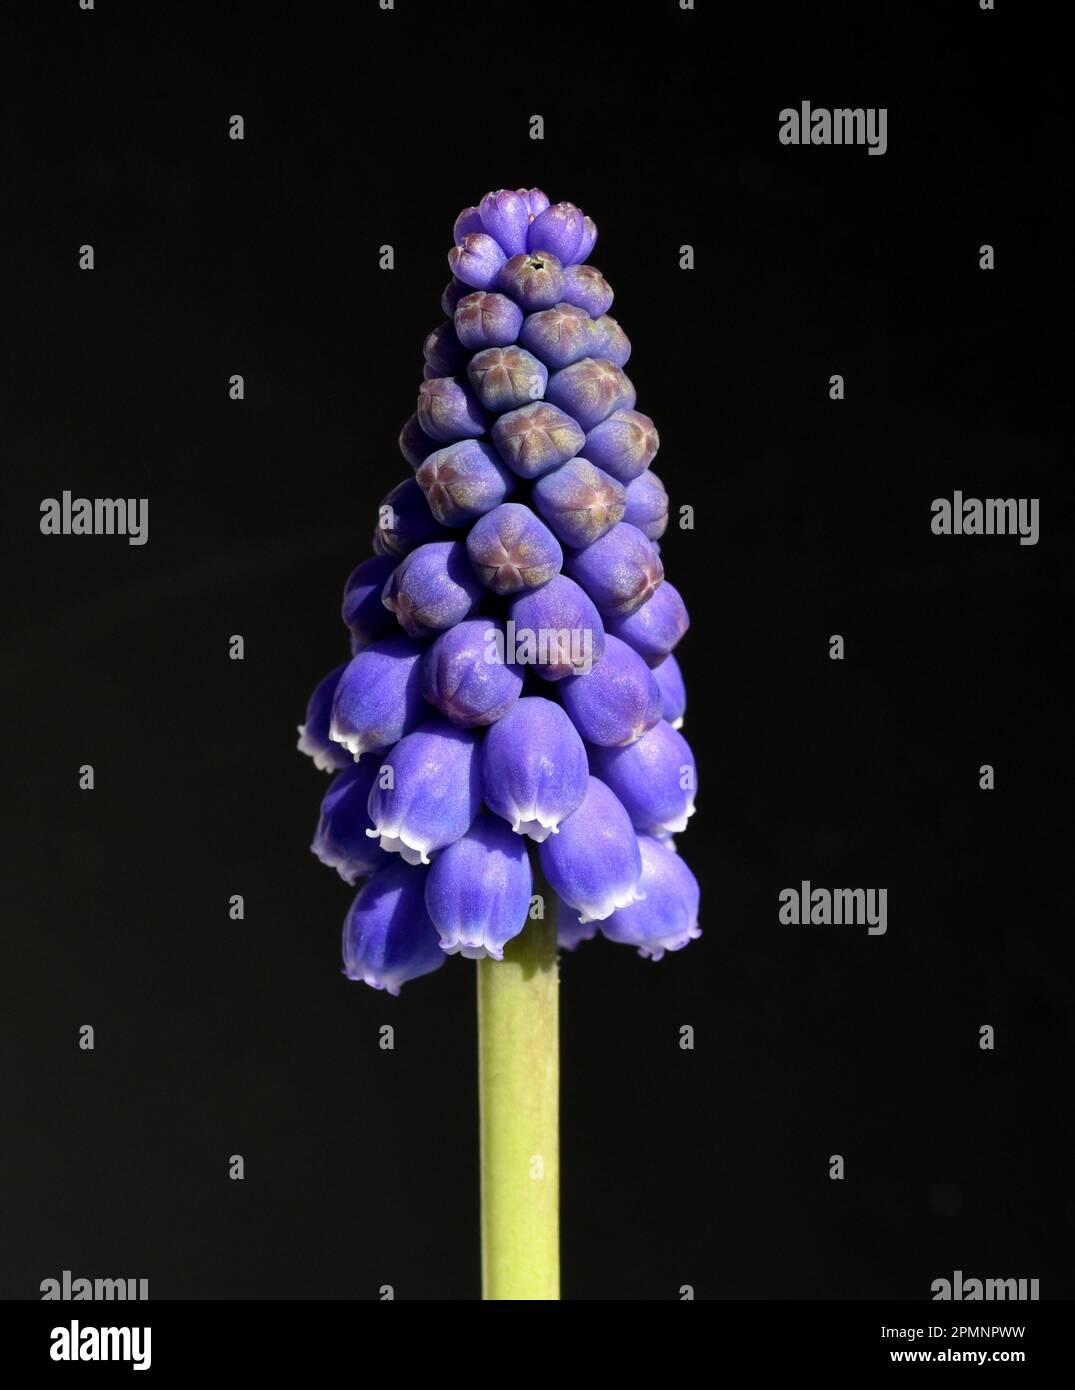 Traubenhyazinthe, Muscari latifolium, ist eine wachsende wachsende wild Blume mit blauen Blueten. Il giacinto d'uva, Muscari latifolium, è un fiore selvatico con blu Foto Stock